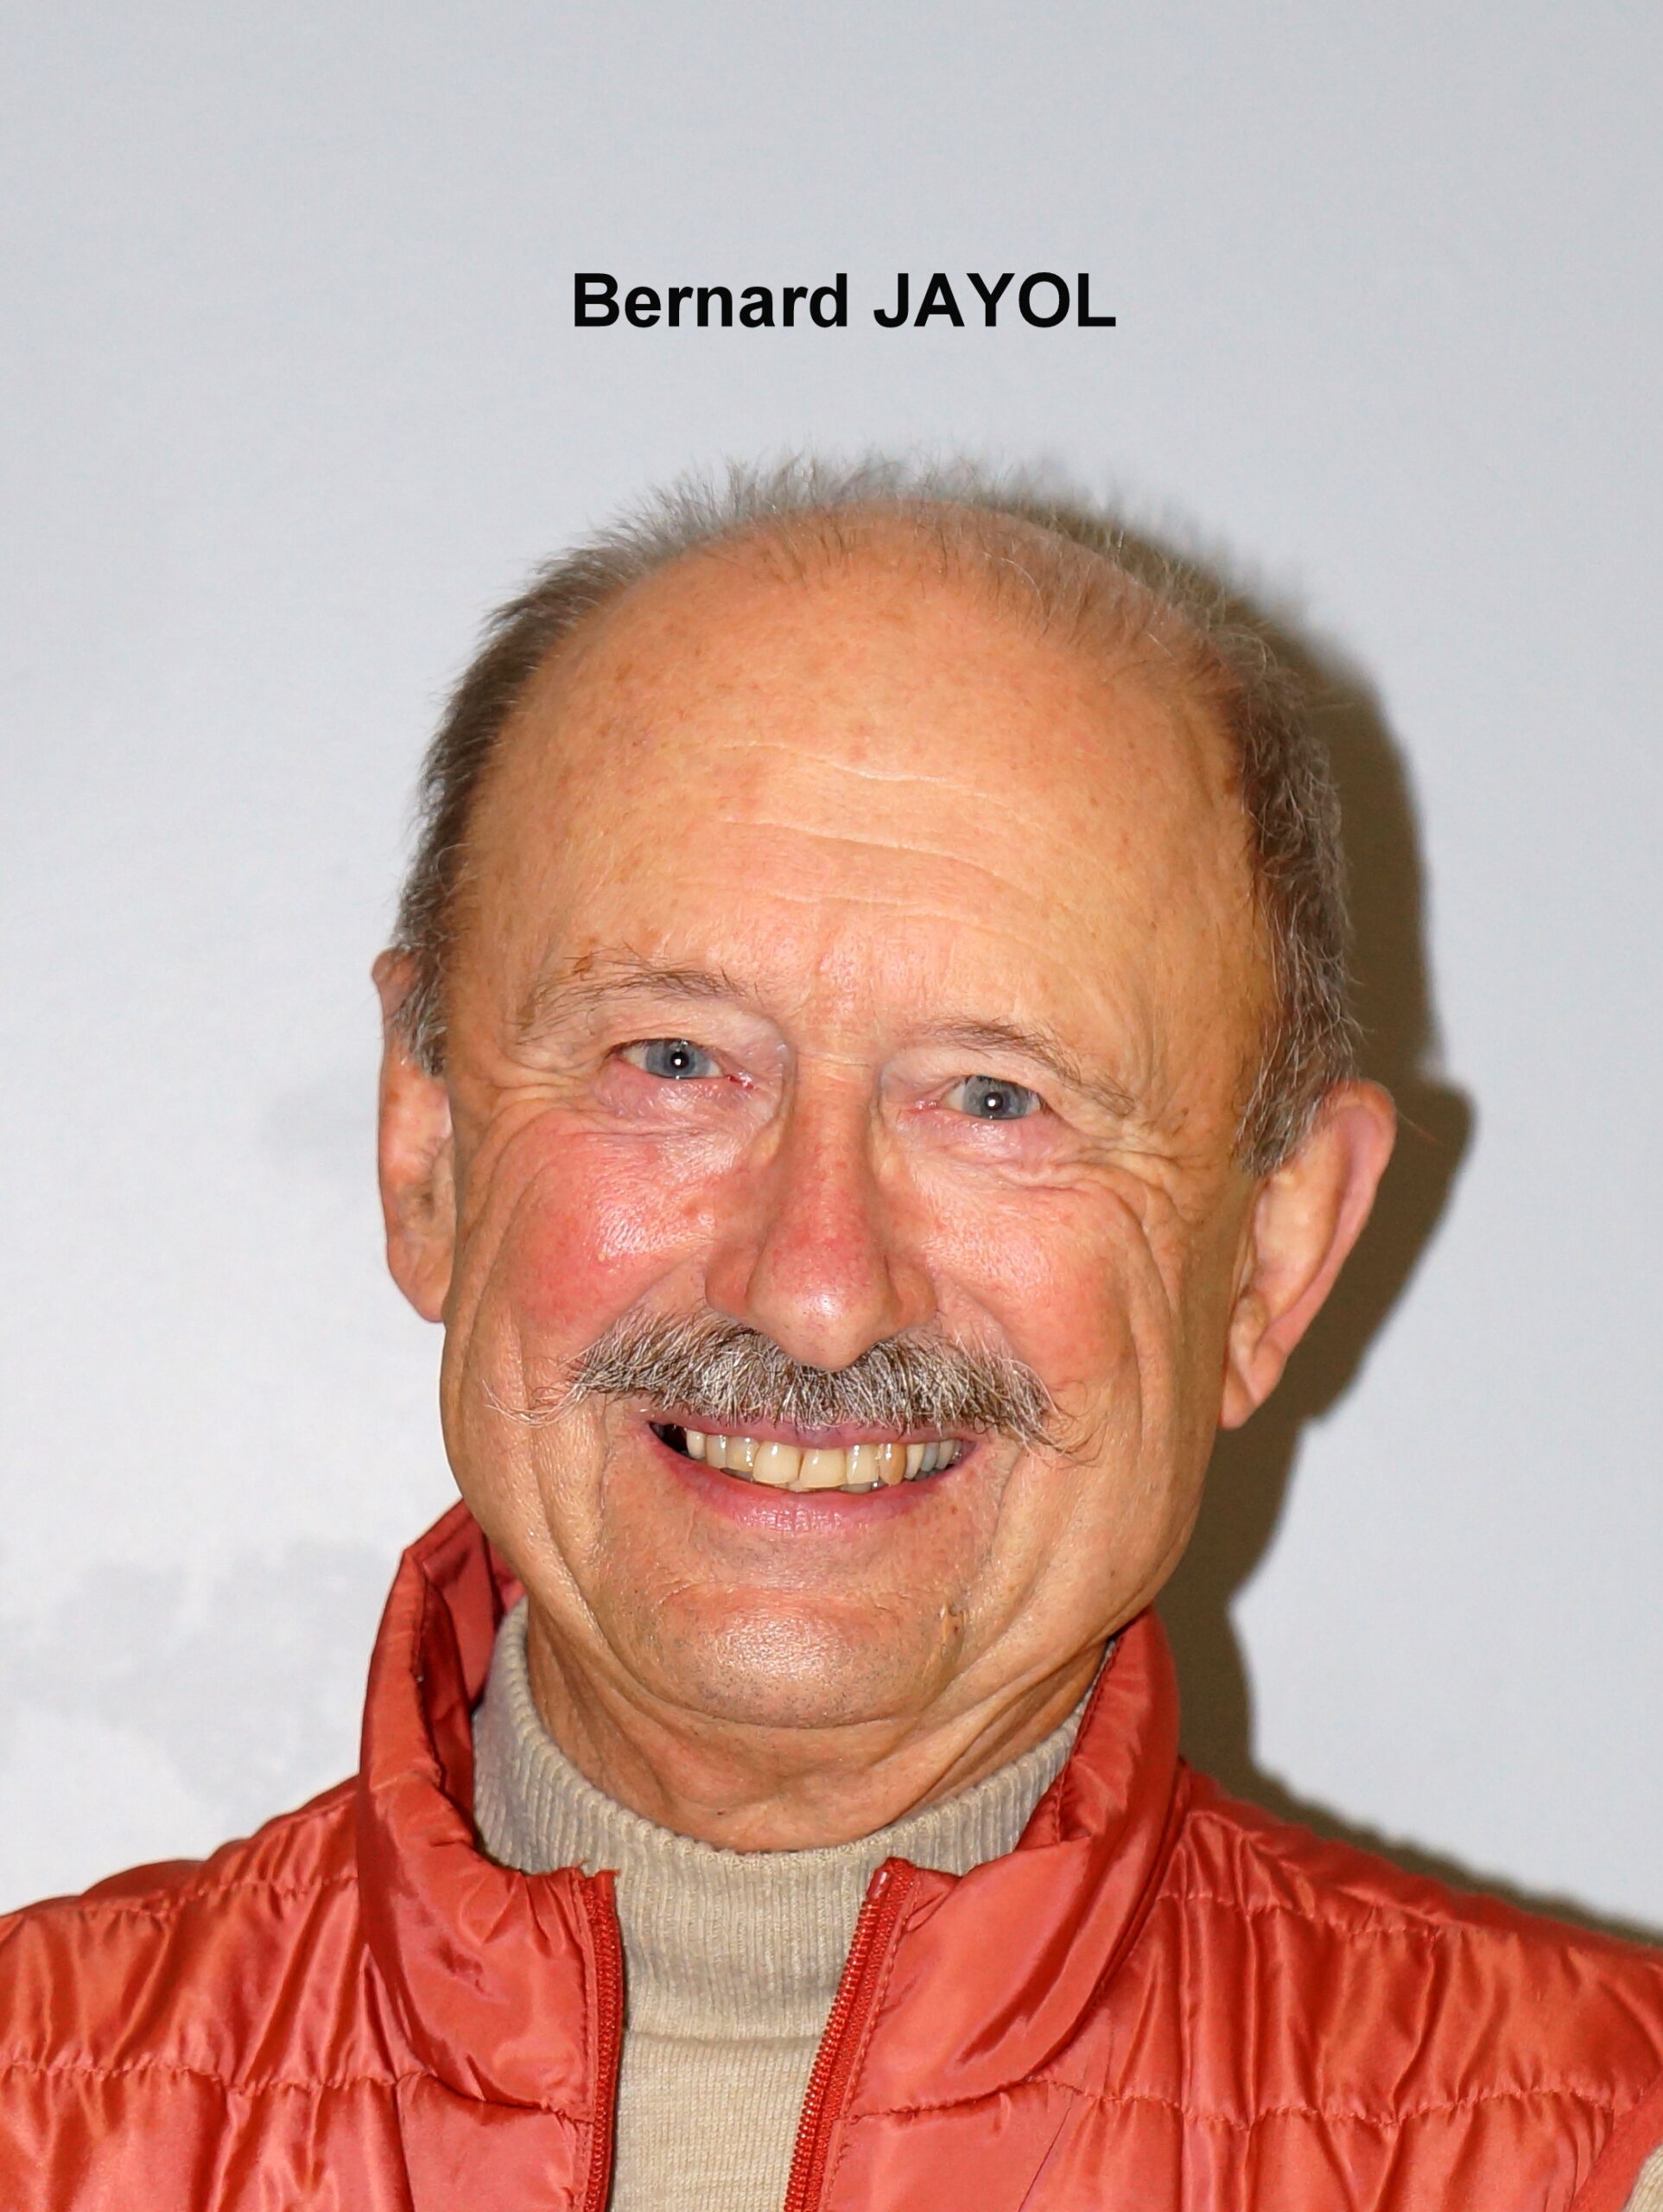 Bernard JAYOL